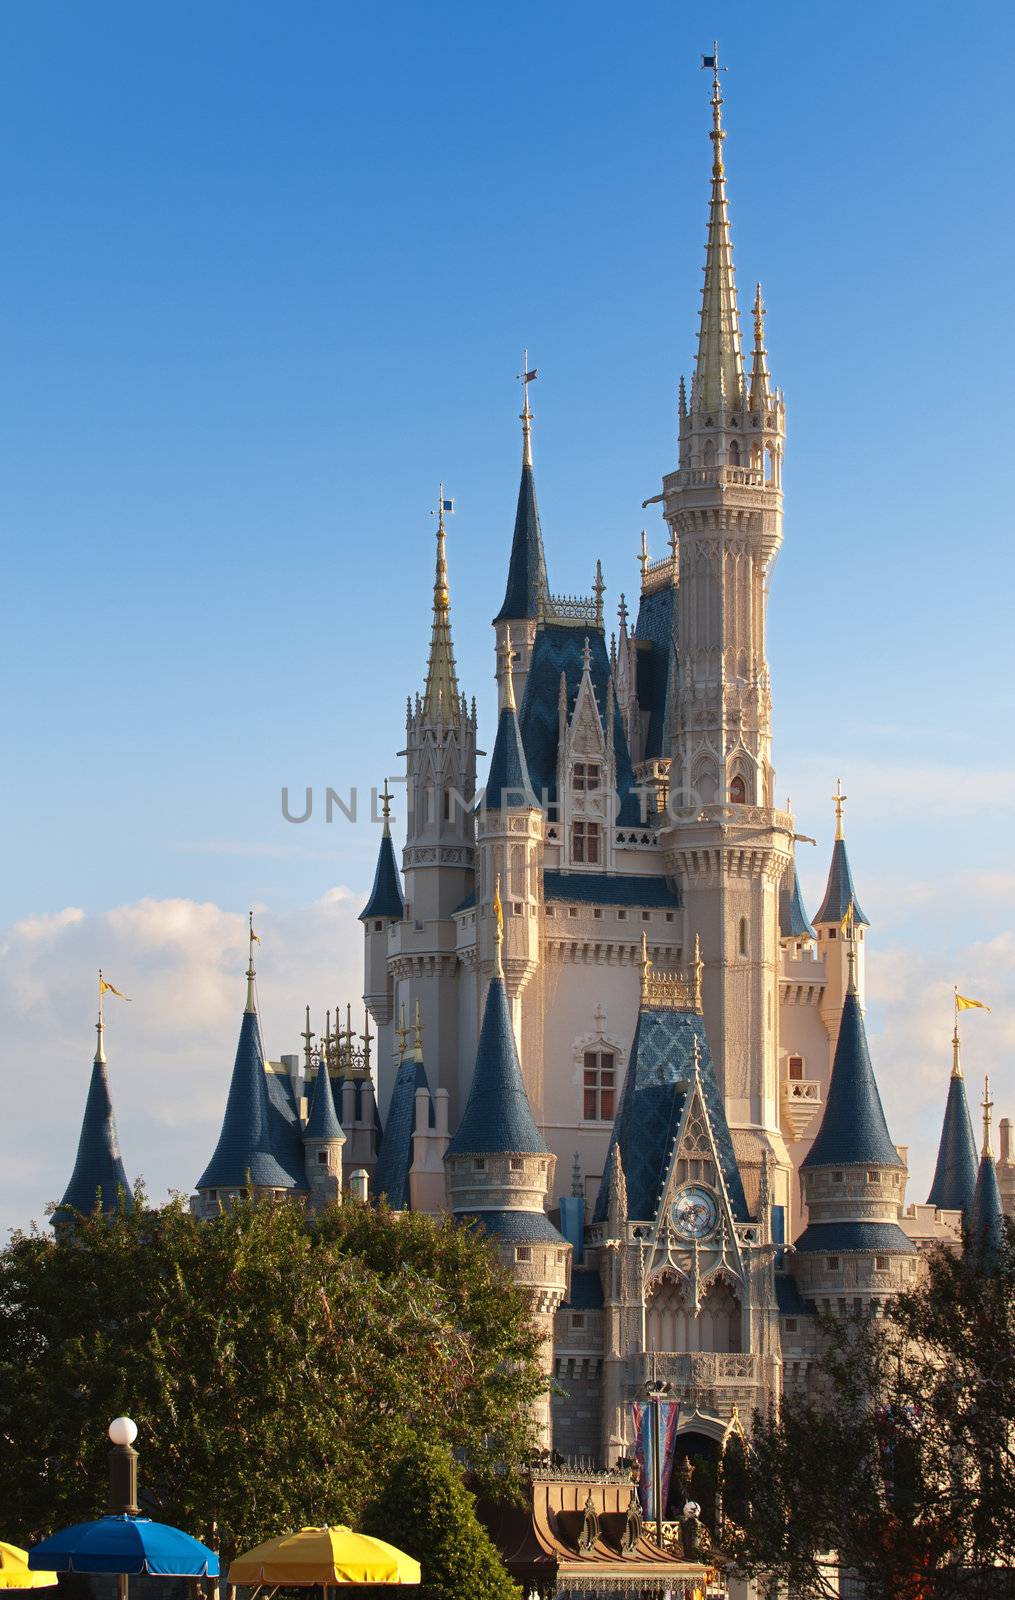 Disney's Magic Kingdom Castle in Florida, October 4th 2010. Approximately 46 million people visit the Walt Disney World Resort annually.